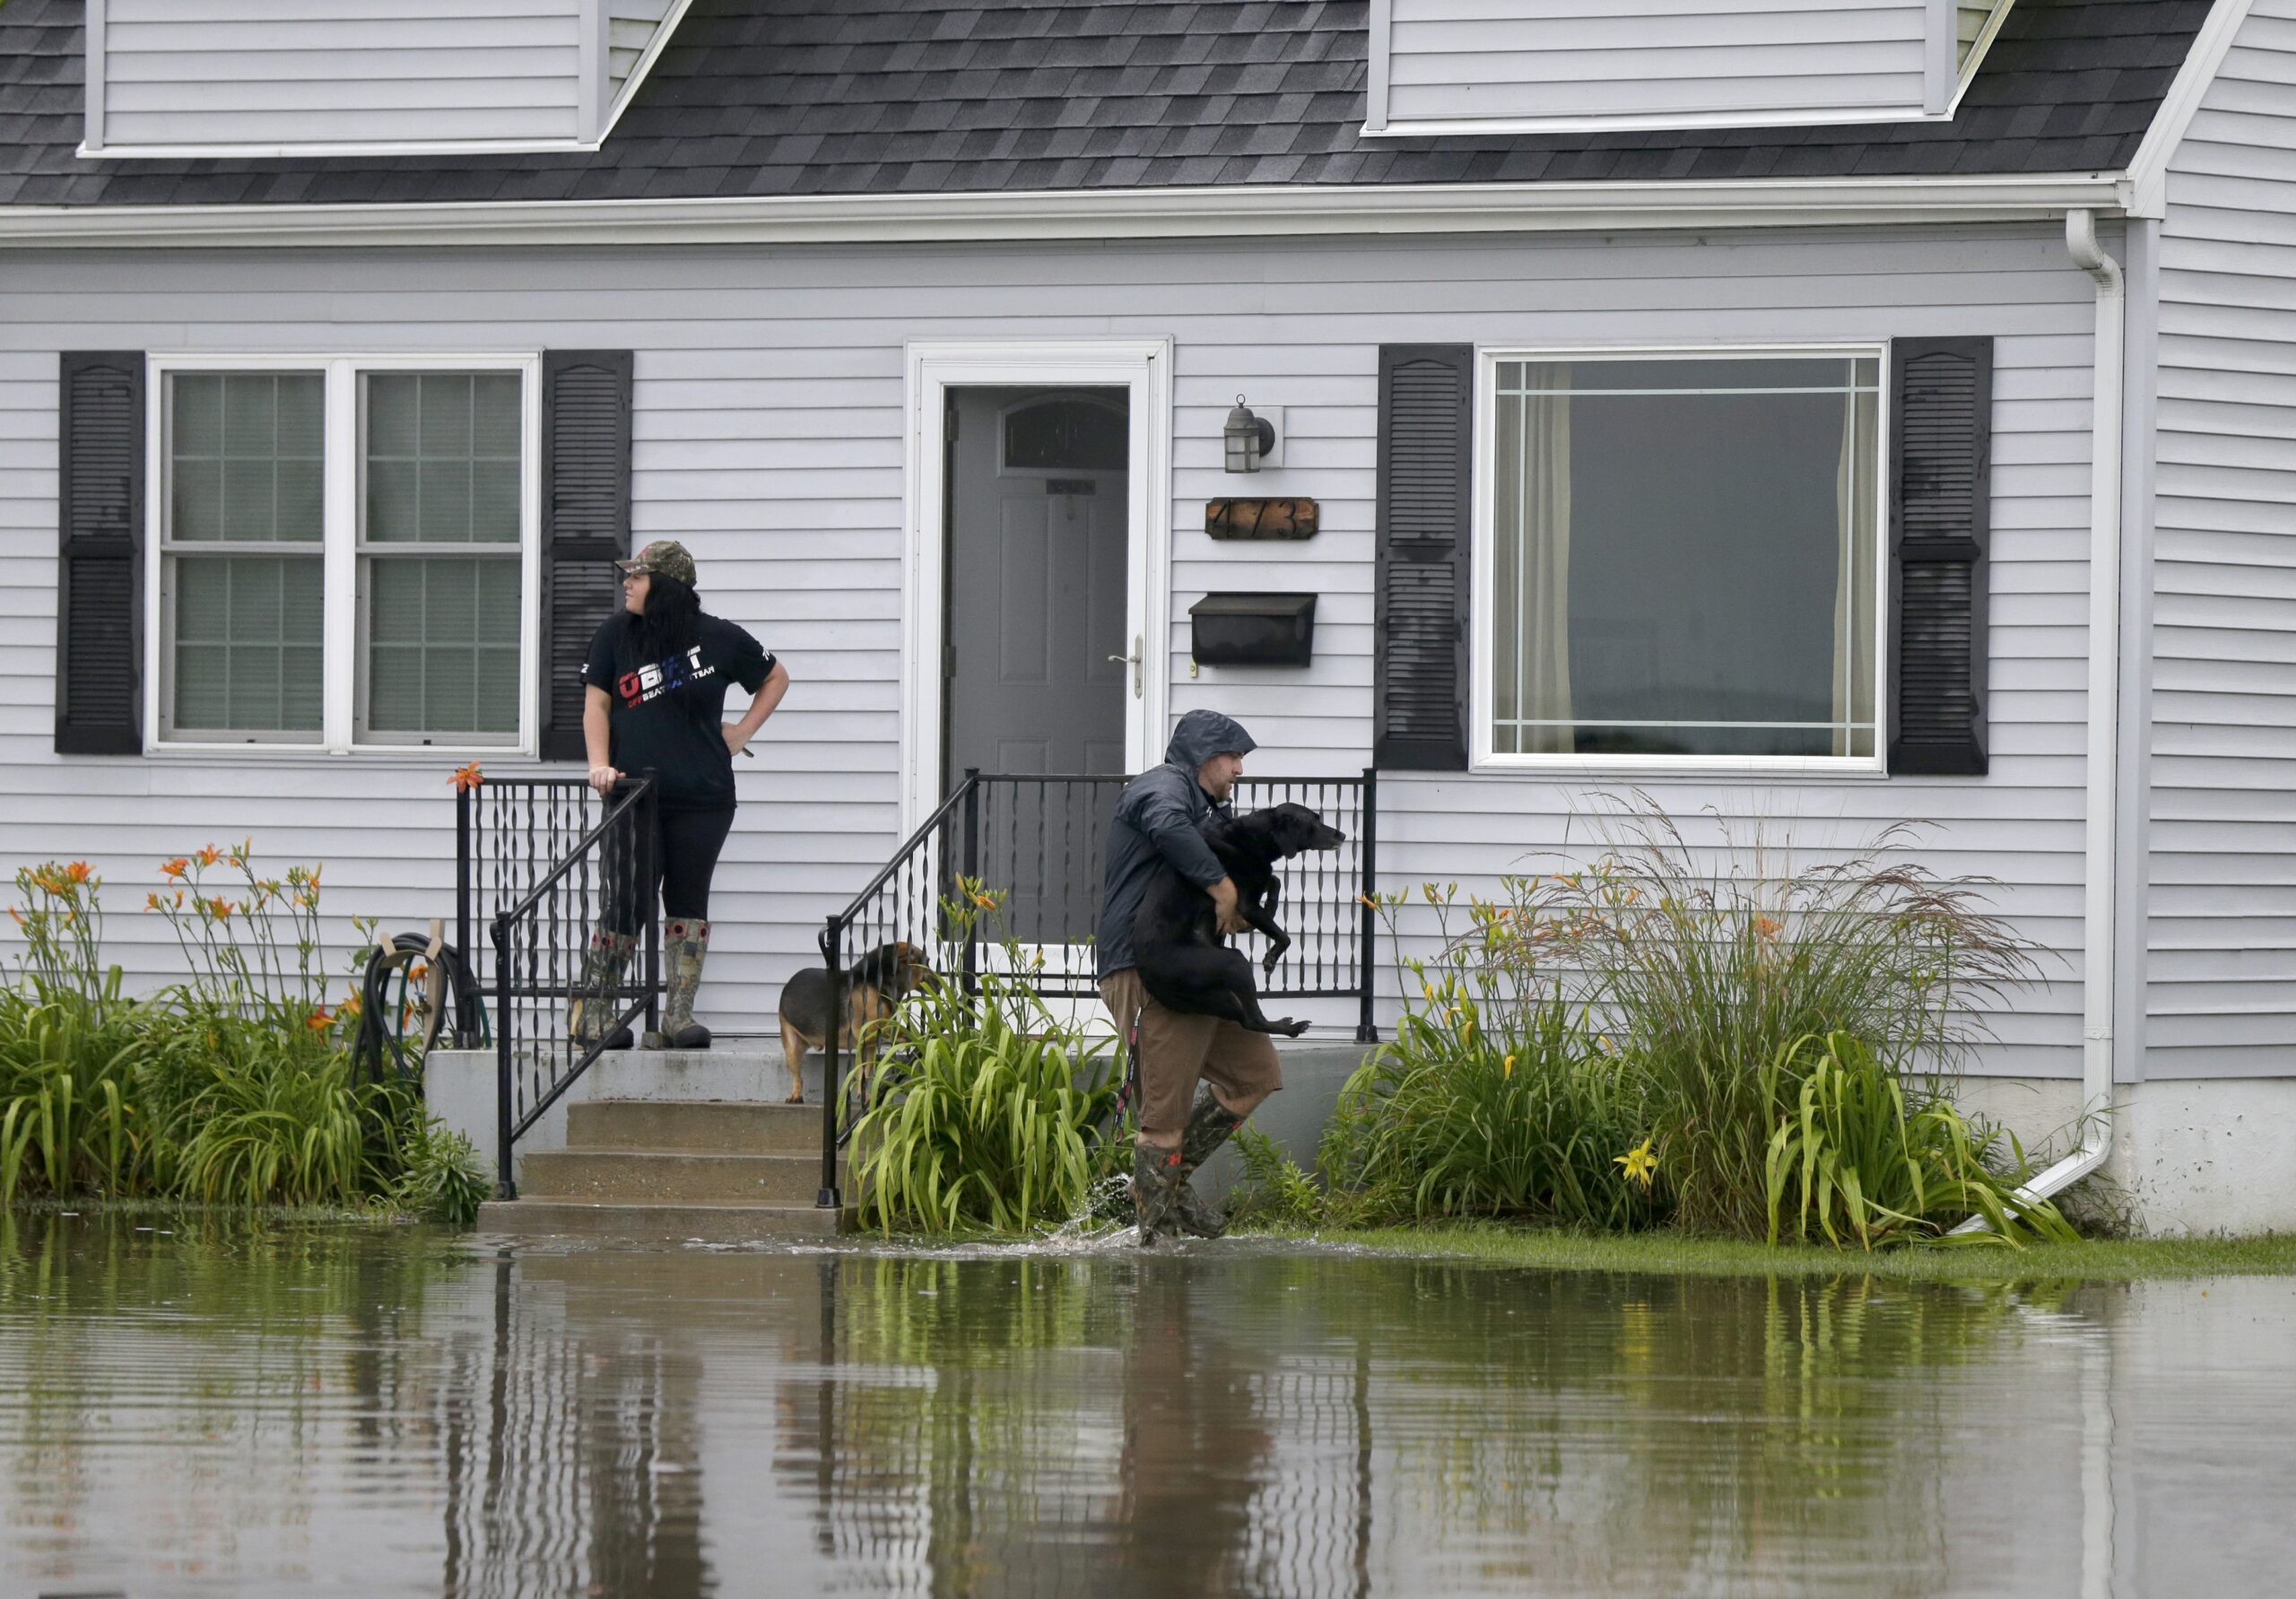 DATCP Warns Of Predatory Contractors Targeting Flood-Affected Communities